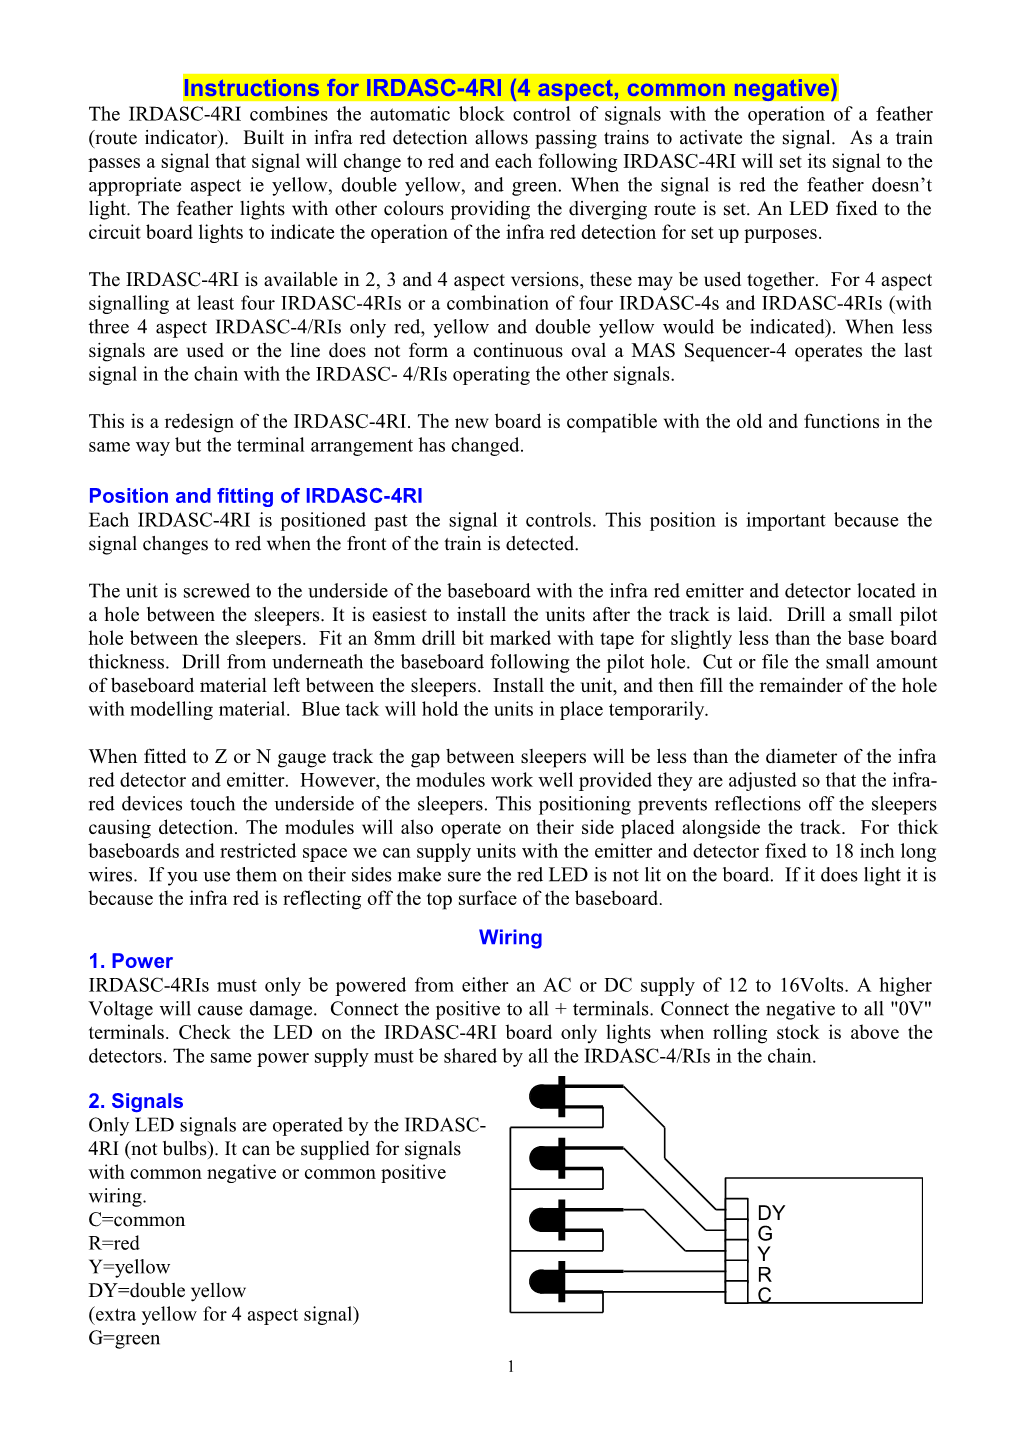 Instructions for IRDASC-4RI (4 Aspect, Common Negative)